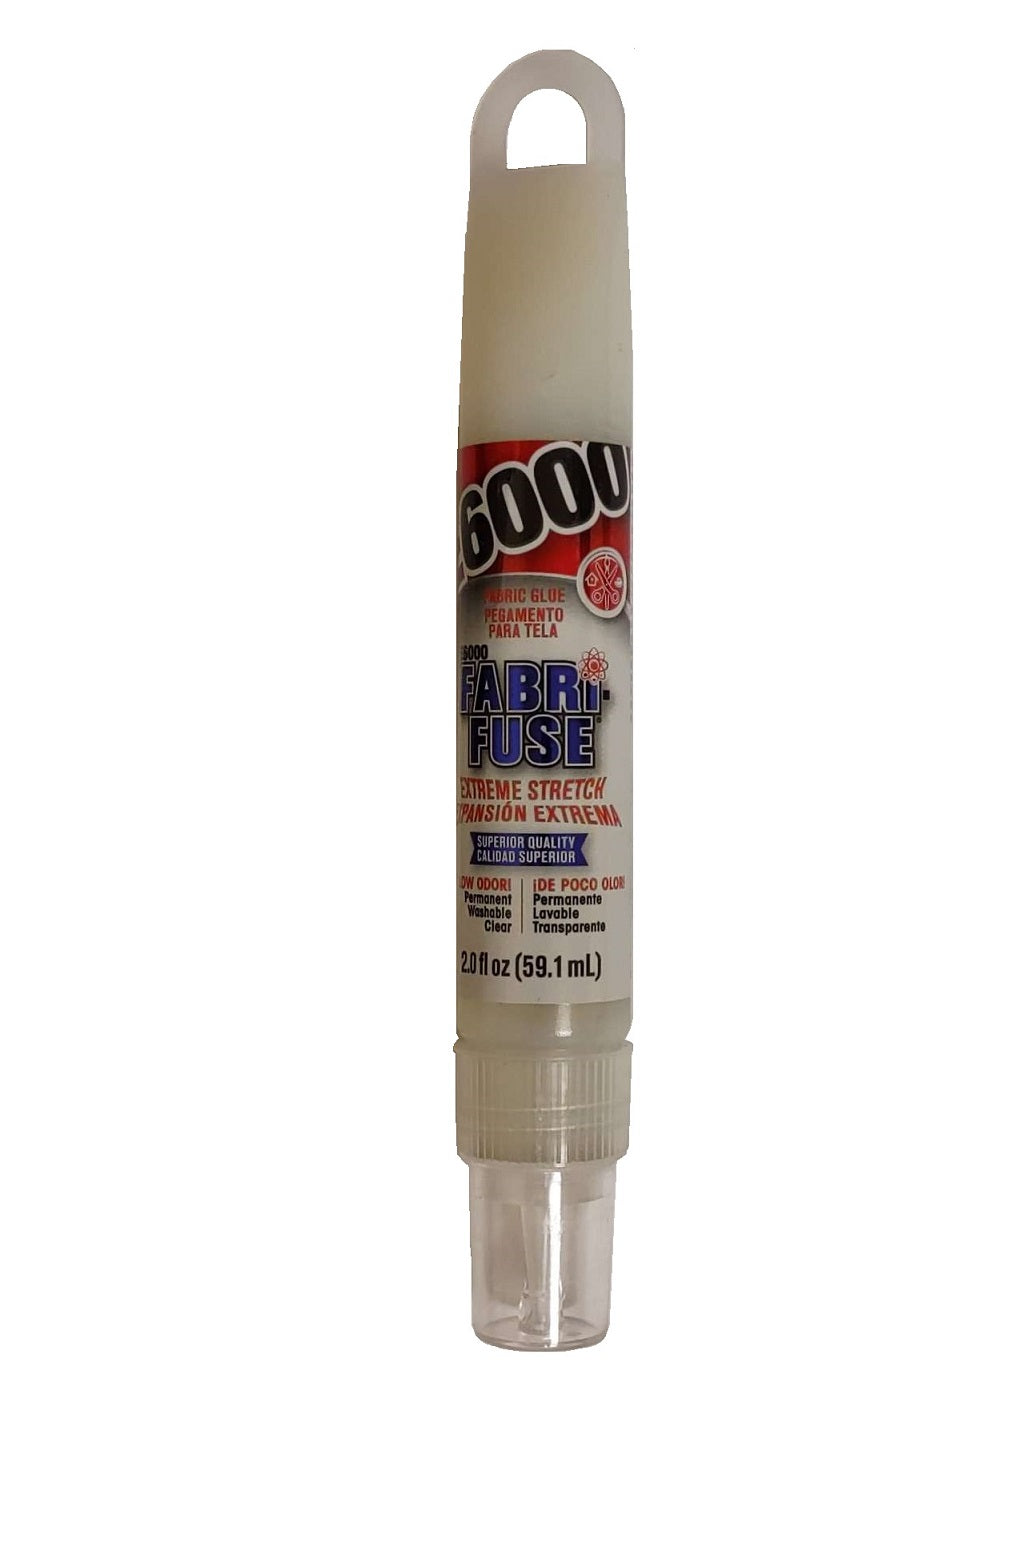 E6000 565004 Fabri-Fuse Adhesive - 4 fl oz Shelf Bottle